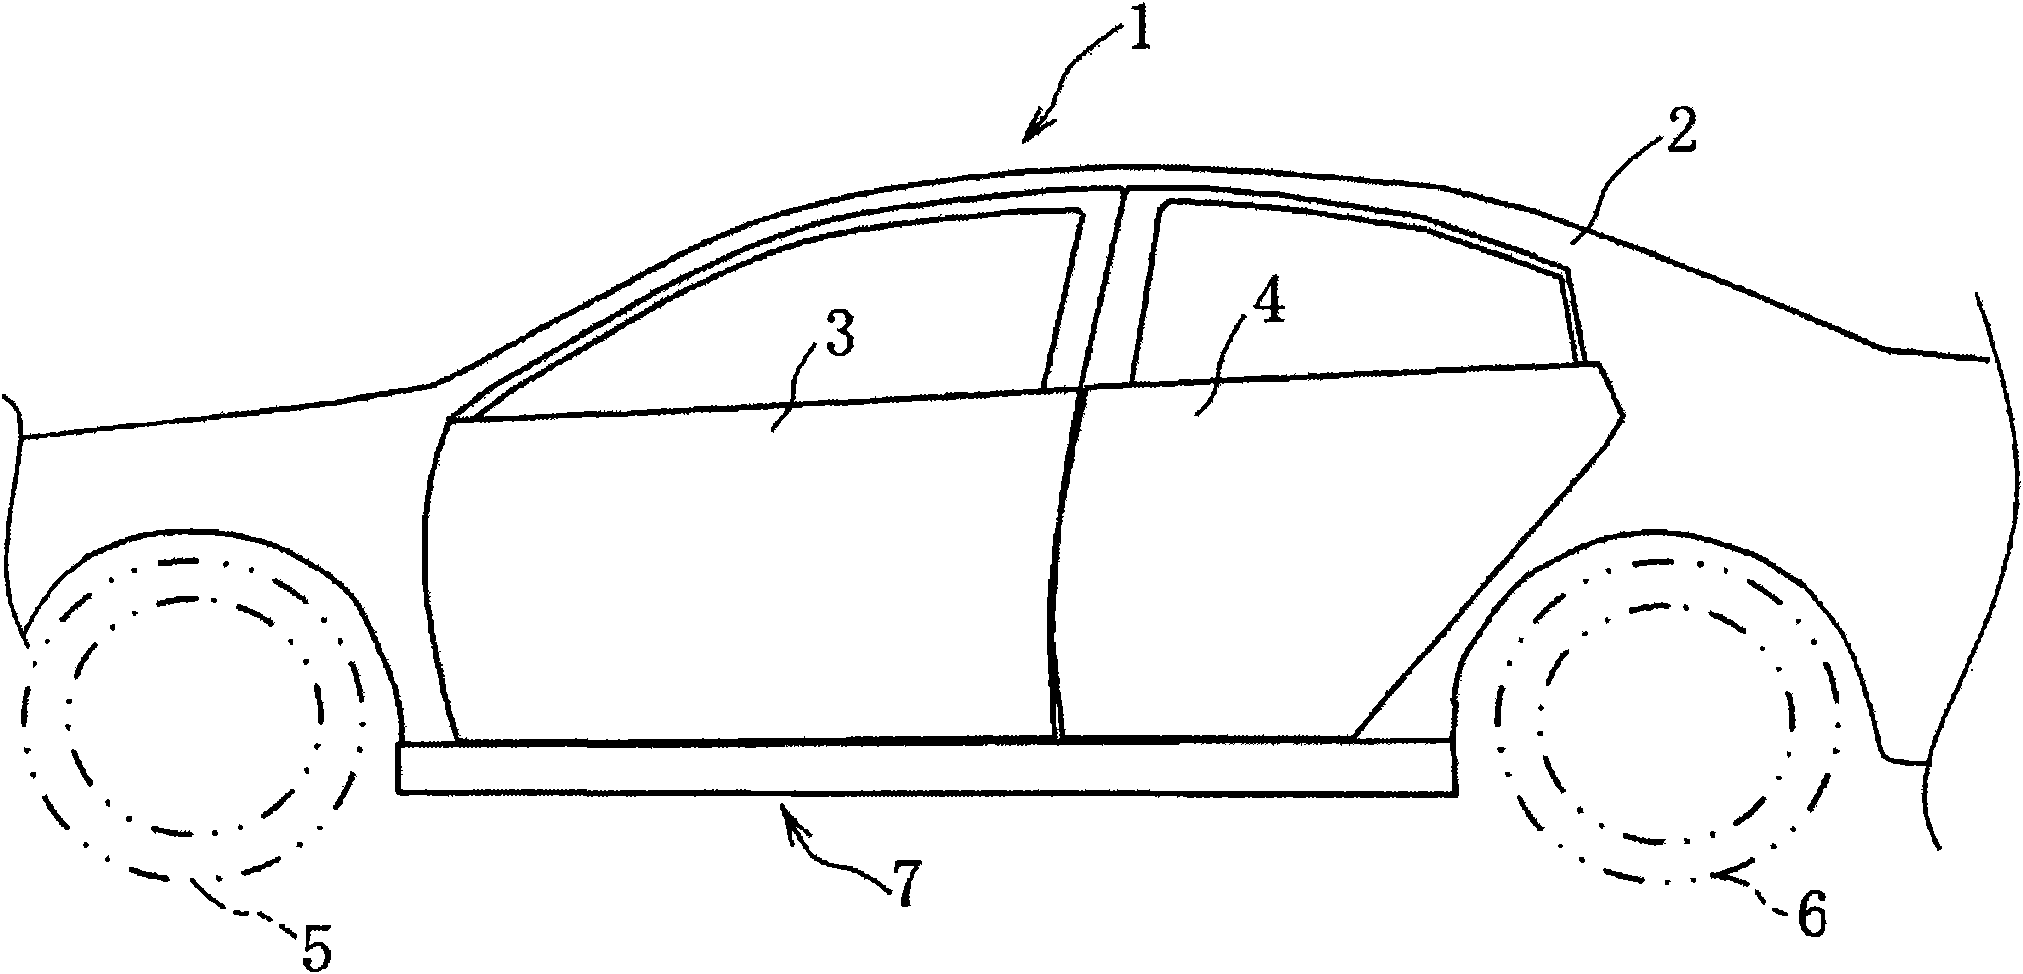 Side vehicle-body structure of automotive vehicle